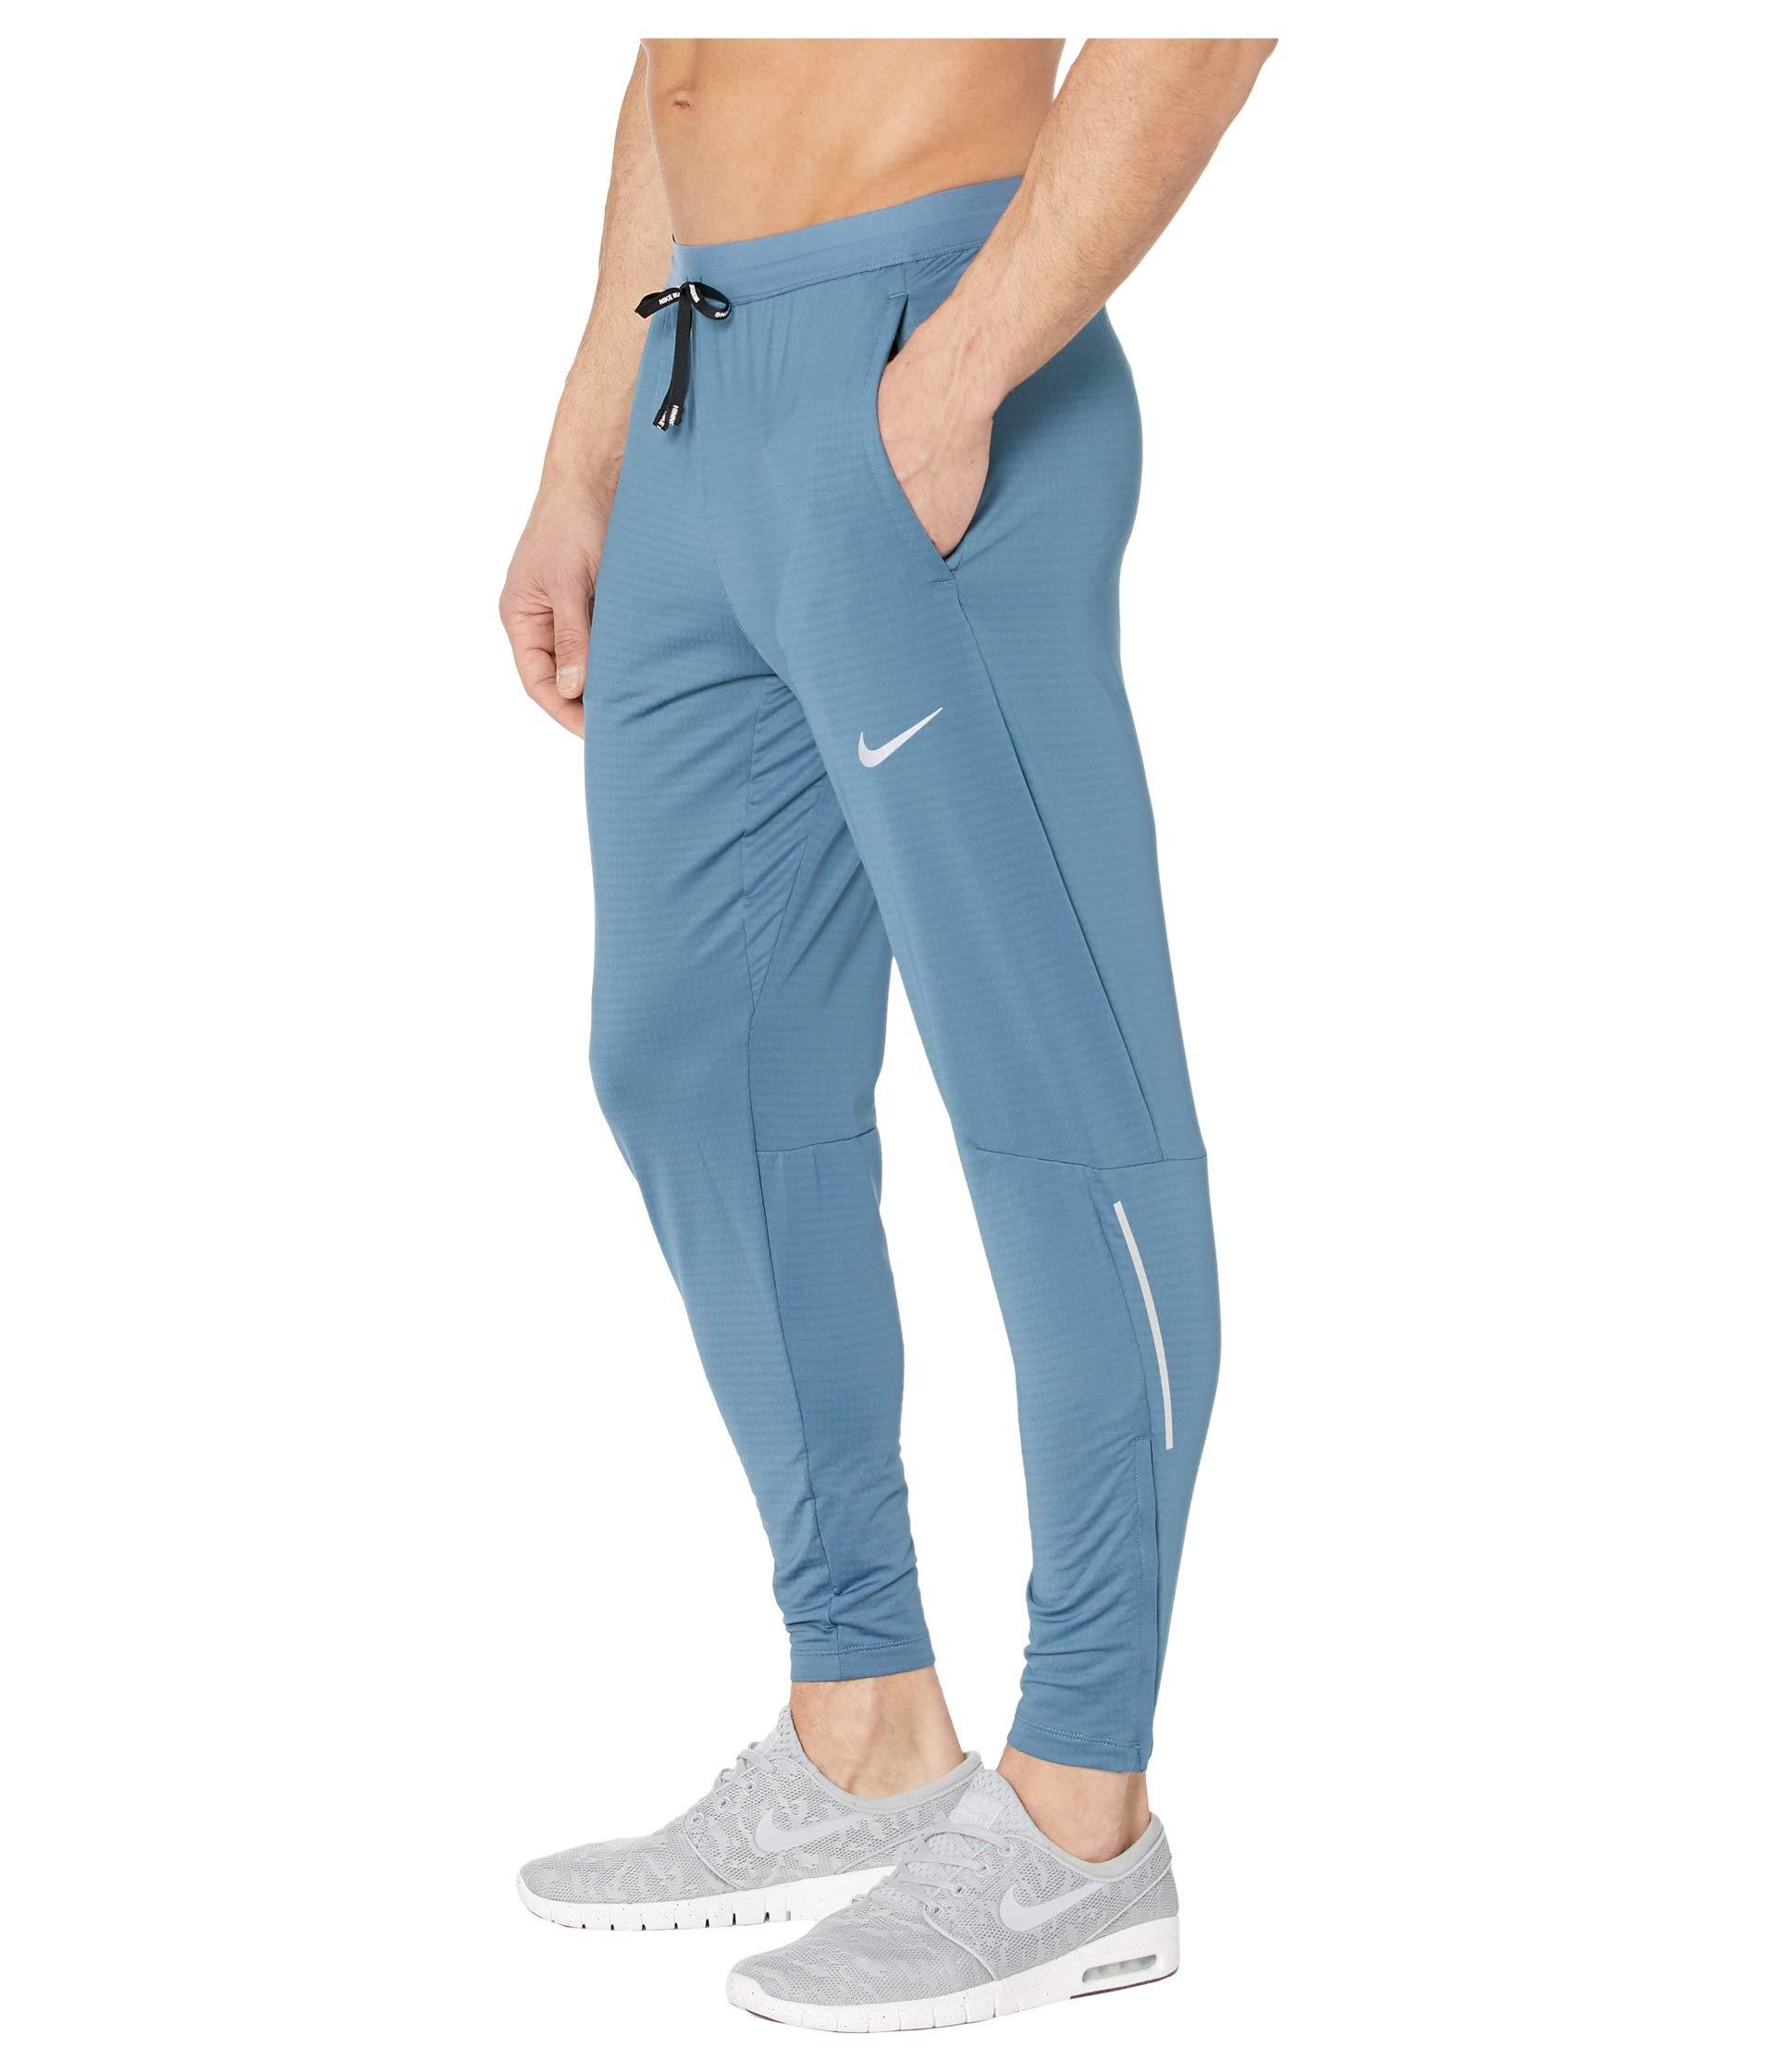 Nike Synthetic Phenom Elite Knit Pants in Blue for Men - Lyst